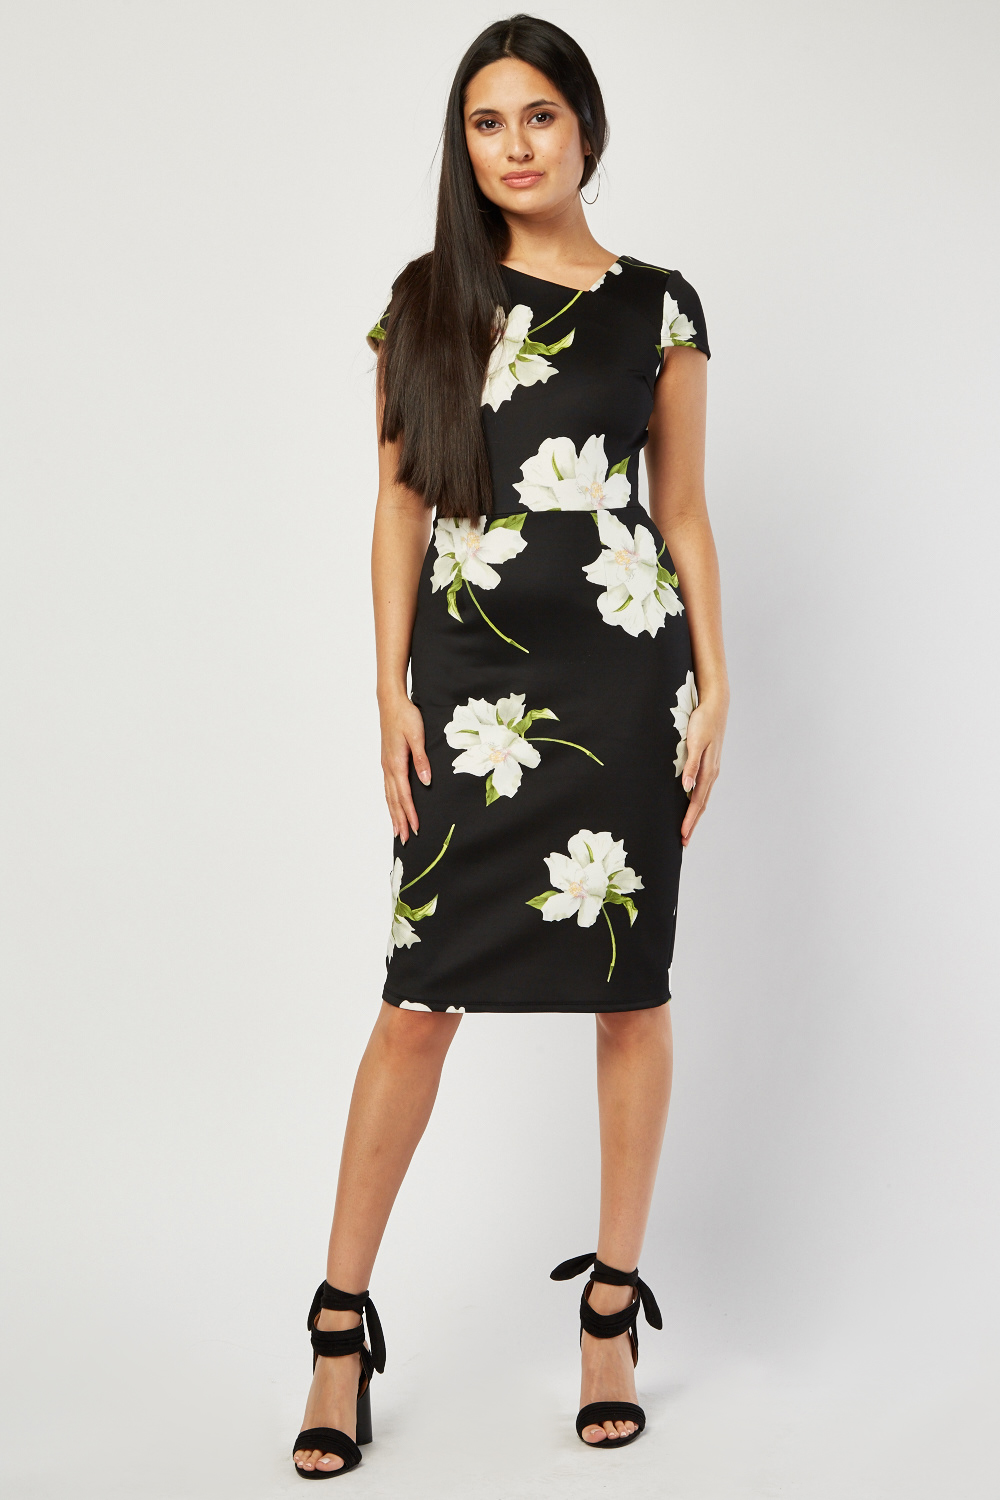 Cap Sleeve Floral Midi Dress - Just $7